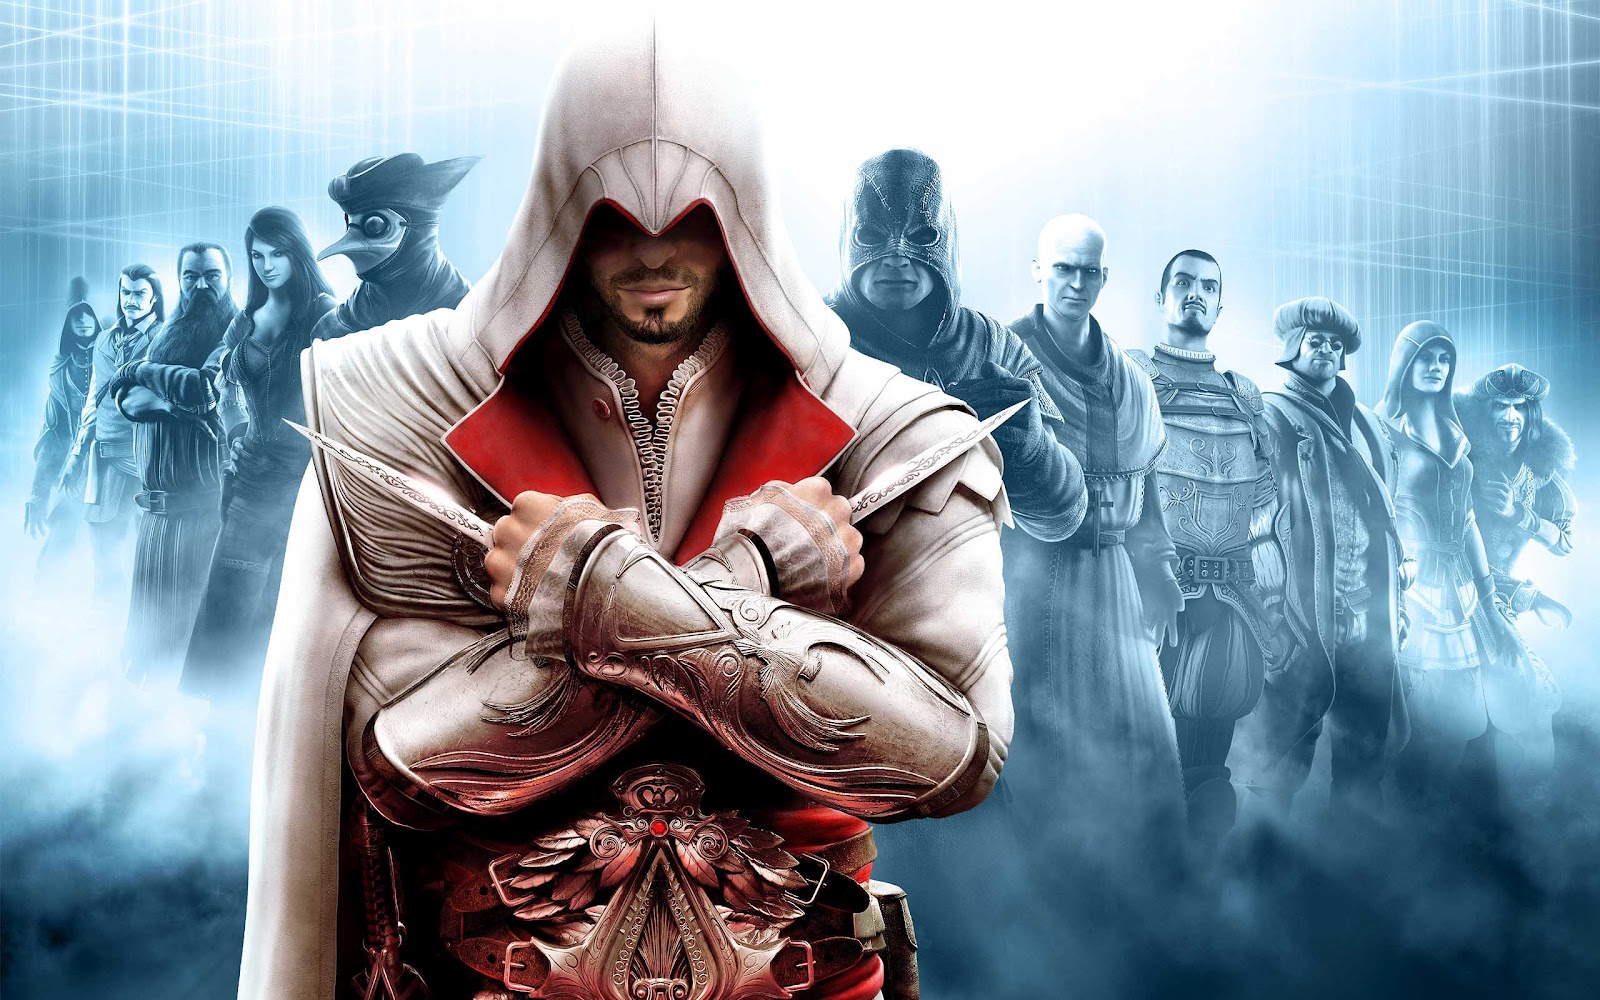 Gallery For Gt Assassin Creed Brotherhood Wallpaper